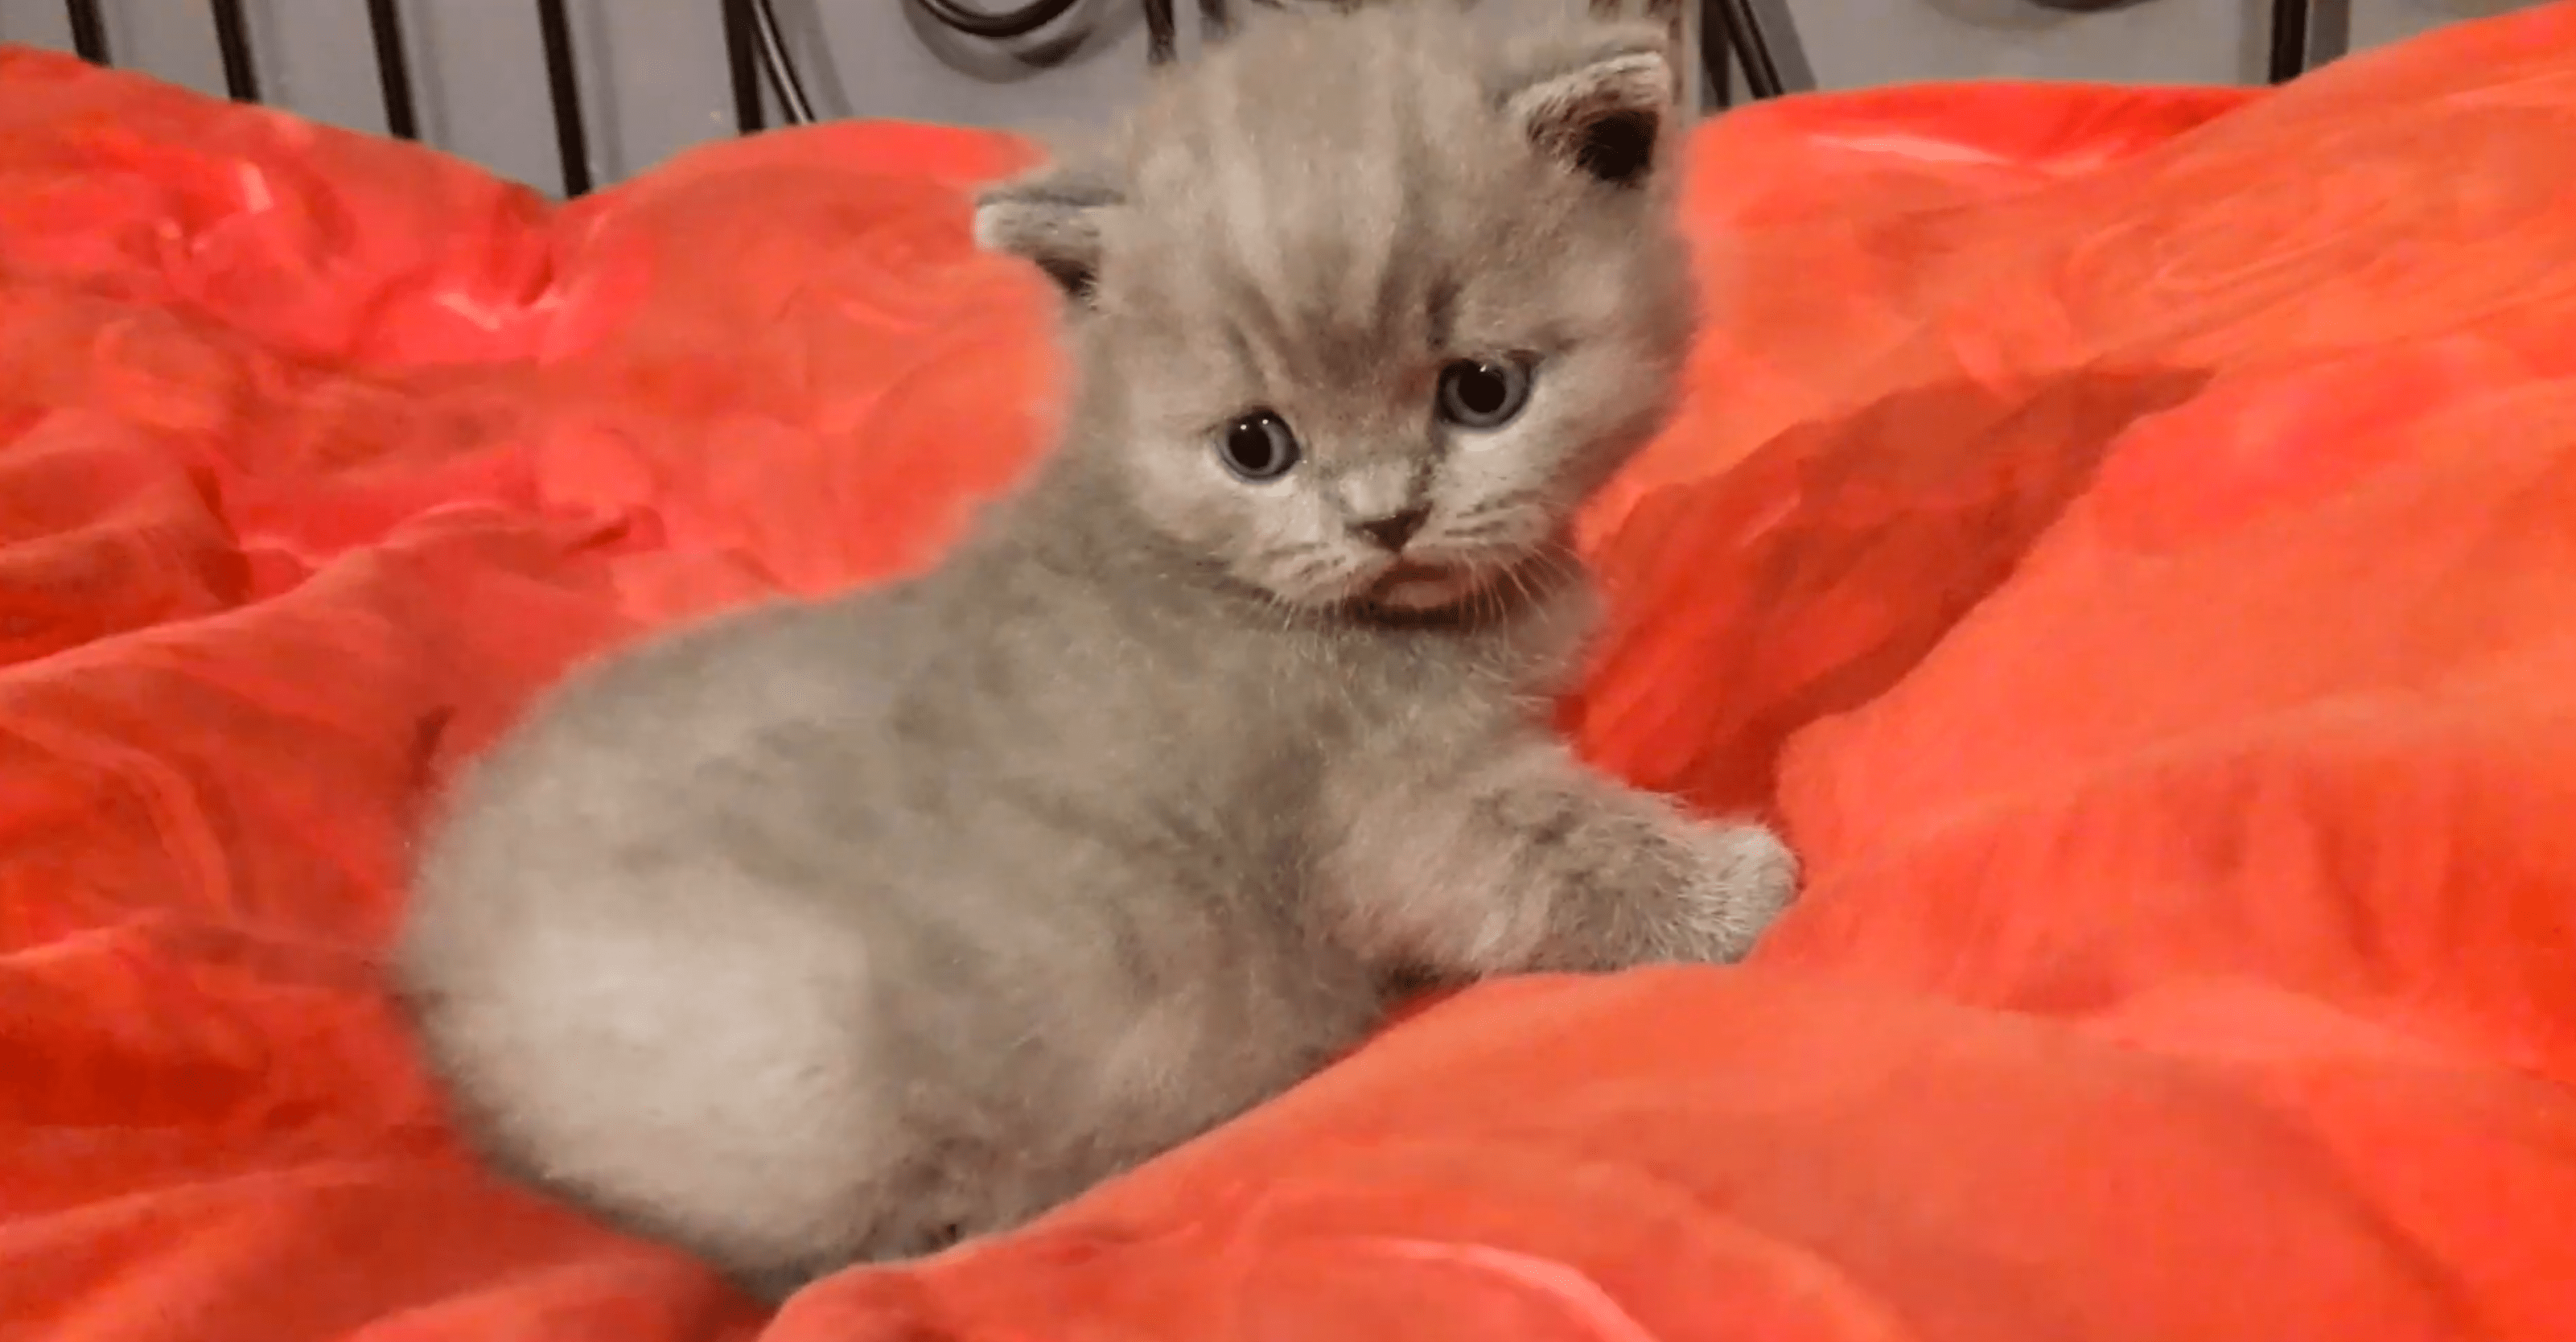 VIDEO – Compilation Cute Kitten